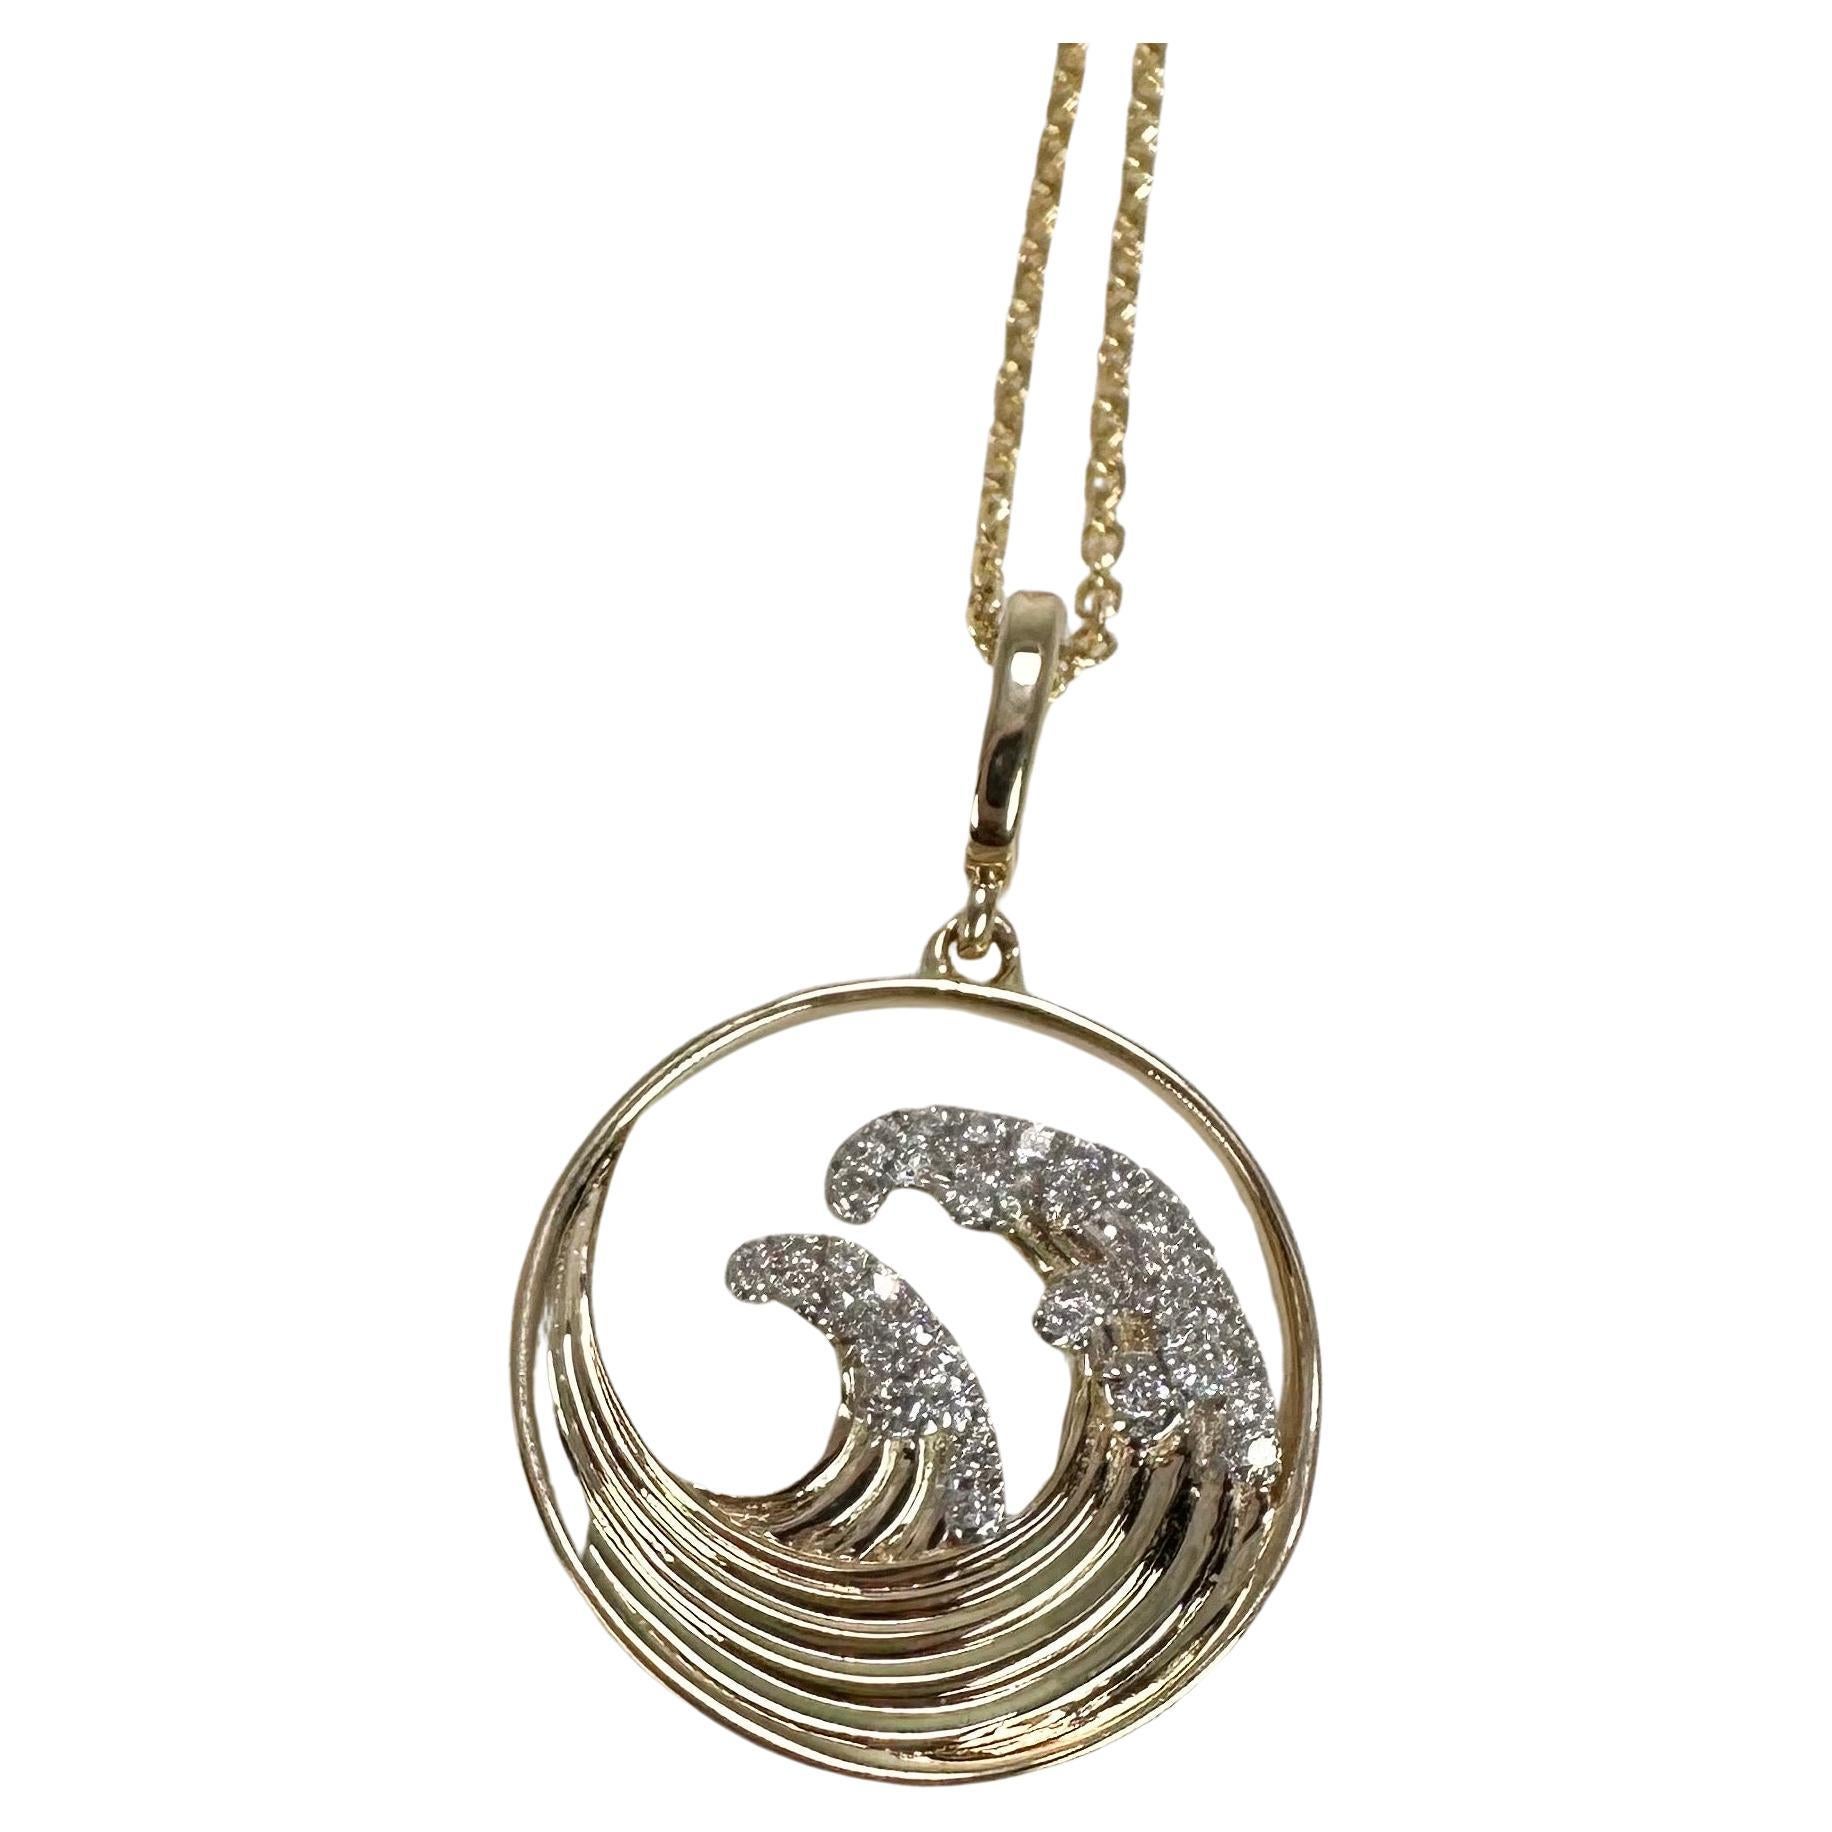 Ocean waves diamond pendant necklace 14KT gold